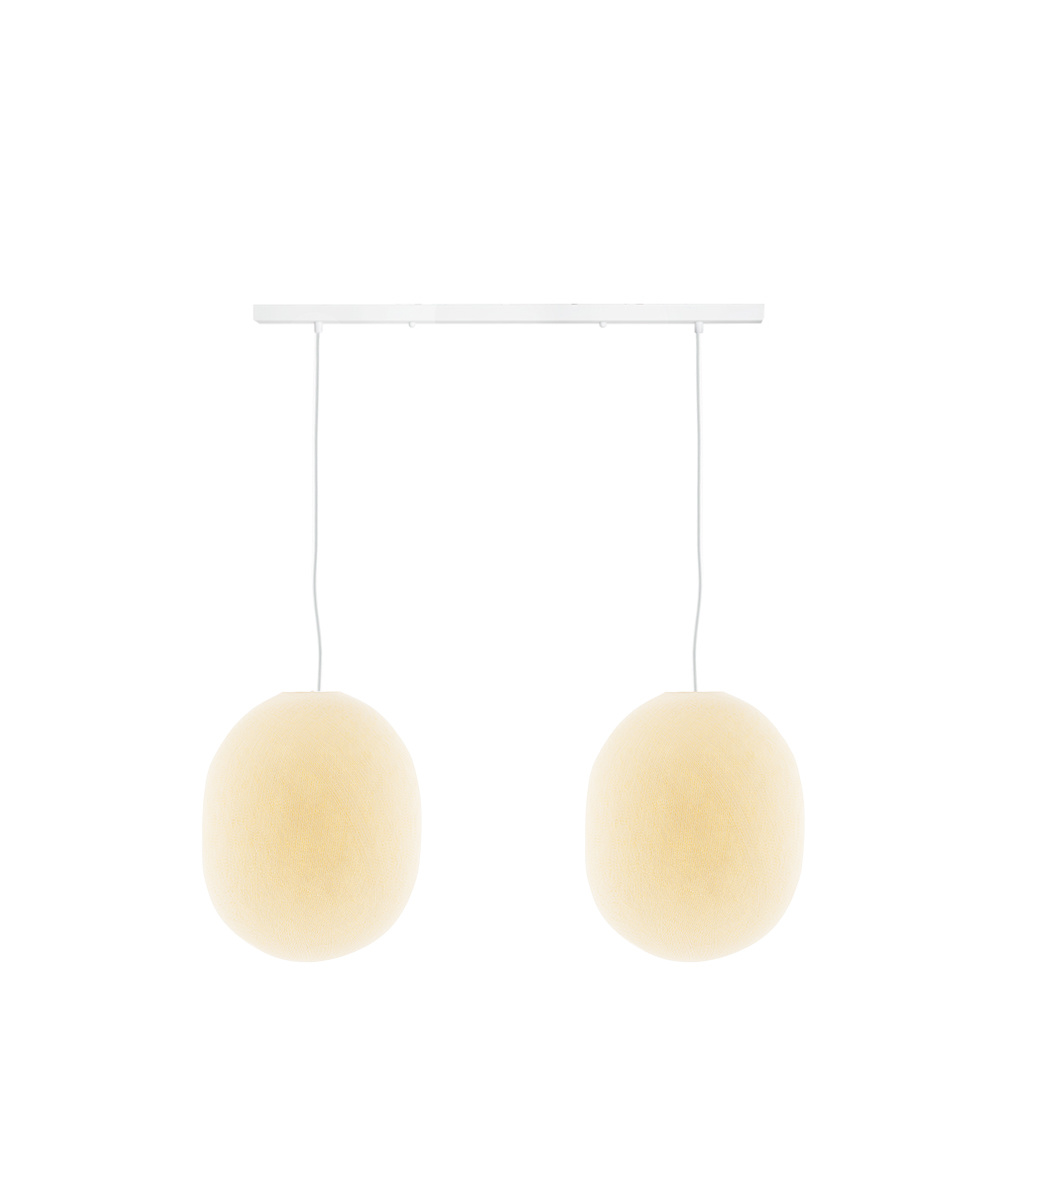 Cotton Ball Lights Tweevoudige hanglamp balk - Oval Shell